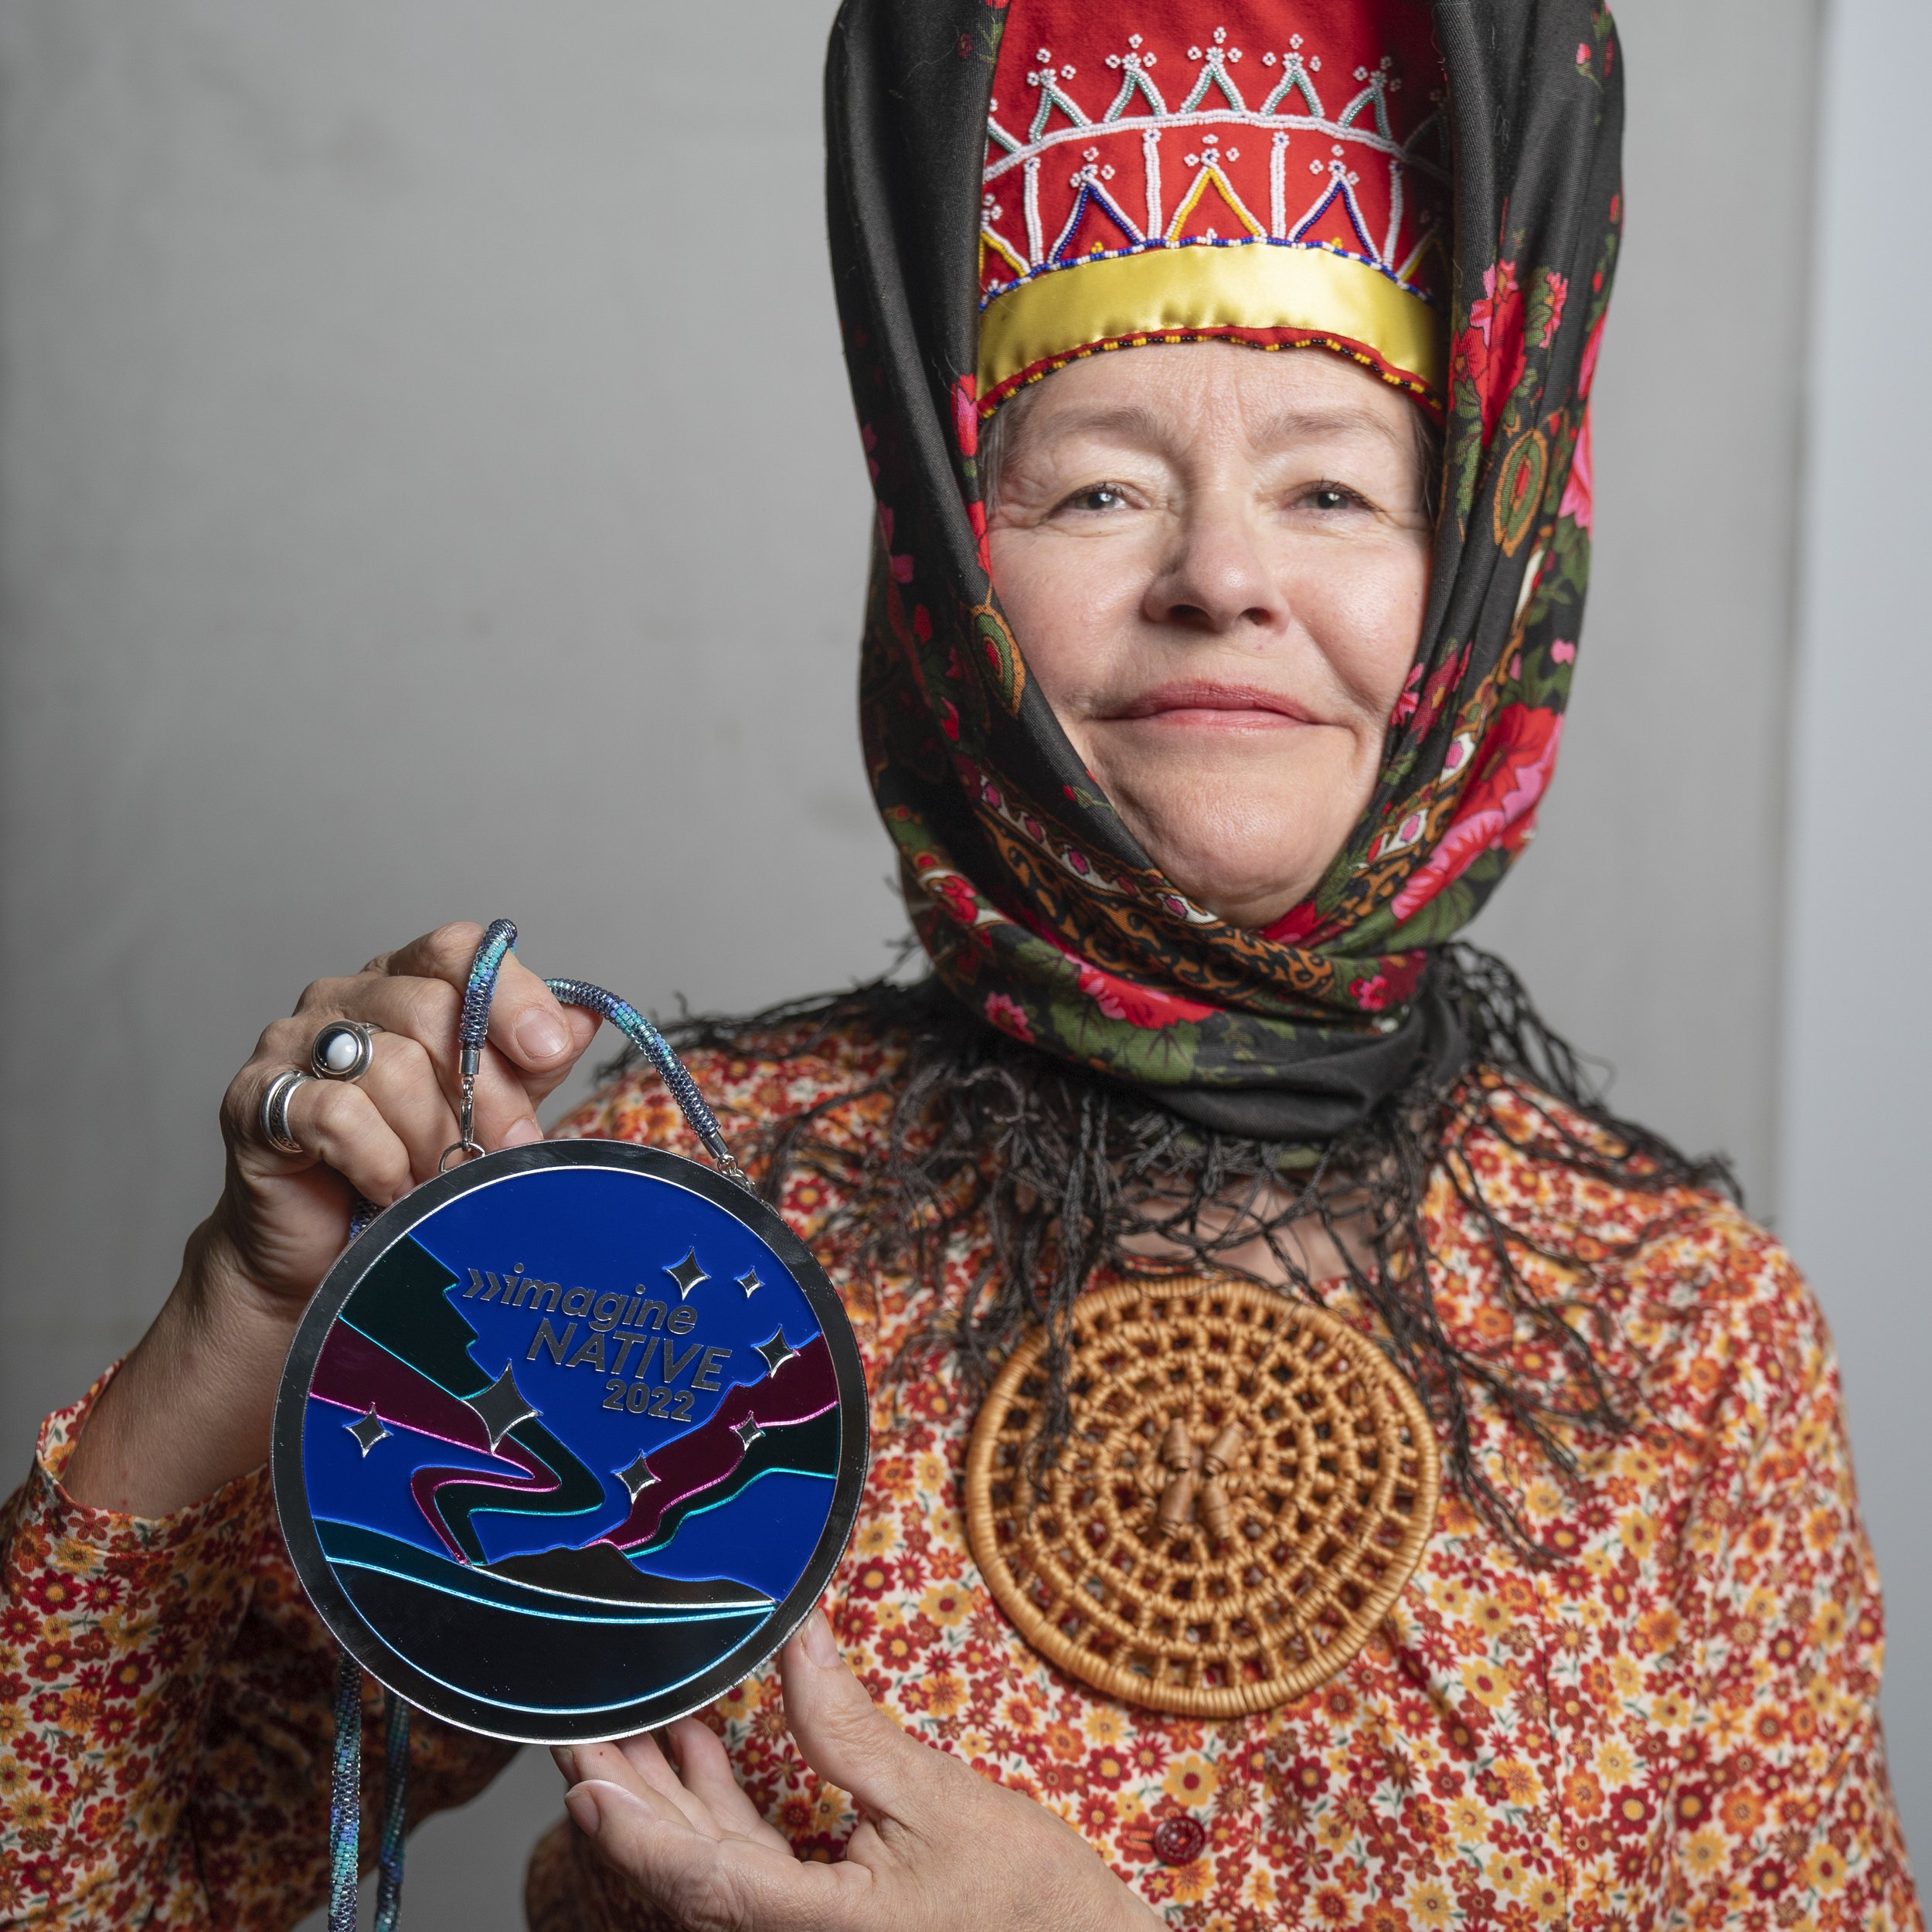 Venke Tørmænen, the subject of the film "Šaamšiǩ - Great Grandmothers Hat”, which won the Documentary Feature Award. Image by Danielle Khan Da Silva.